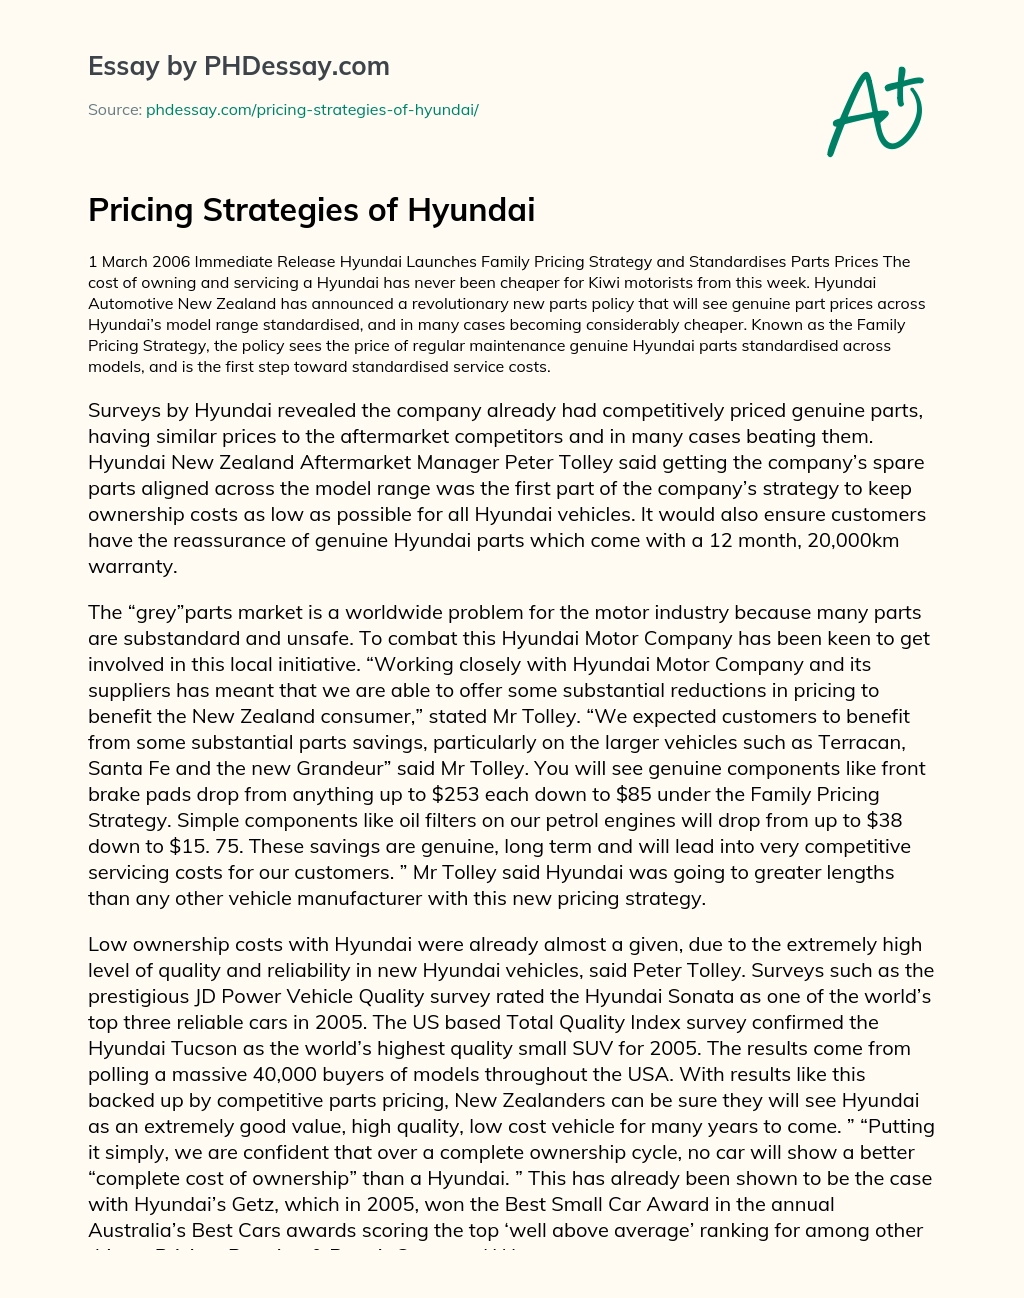 Pricing Strategies of Hyundai essay